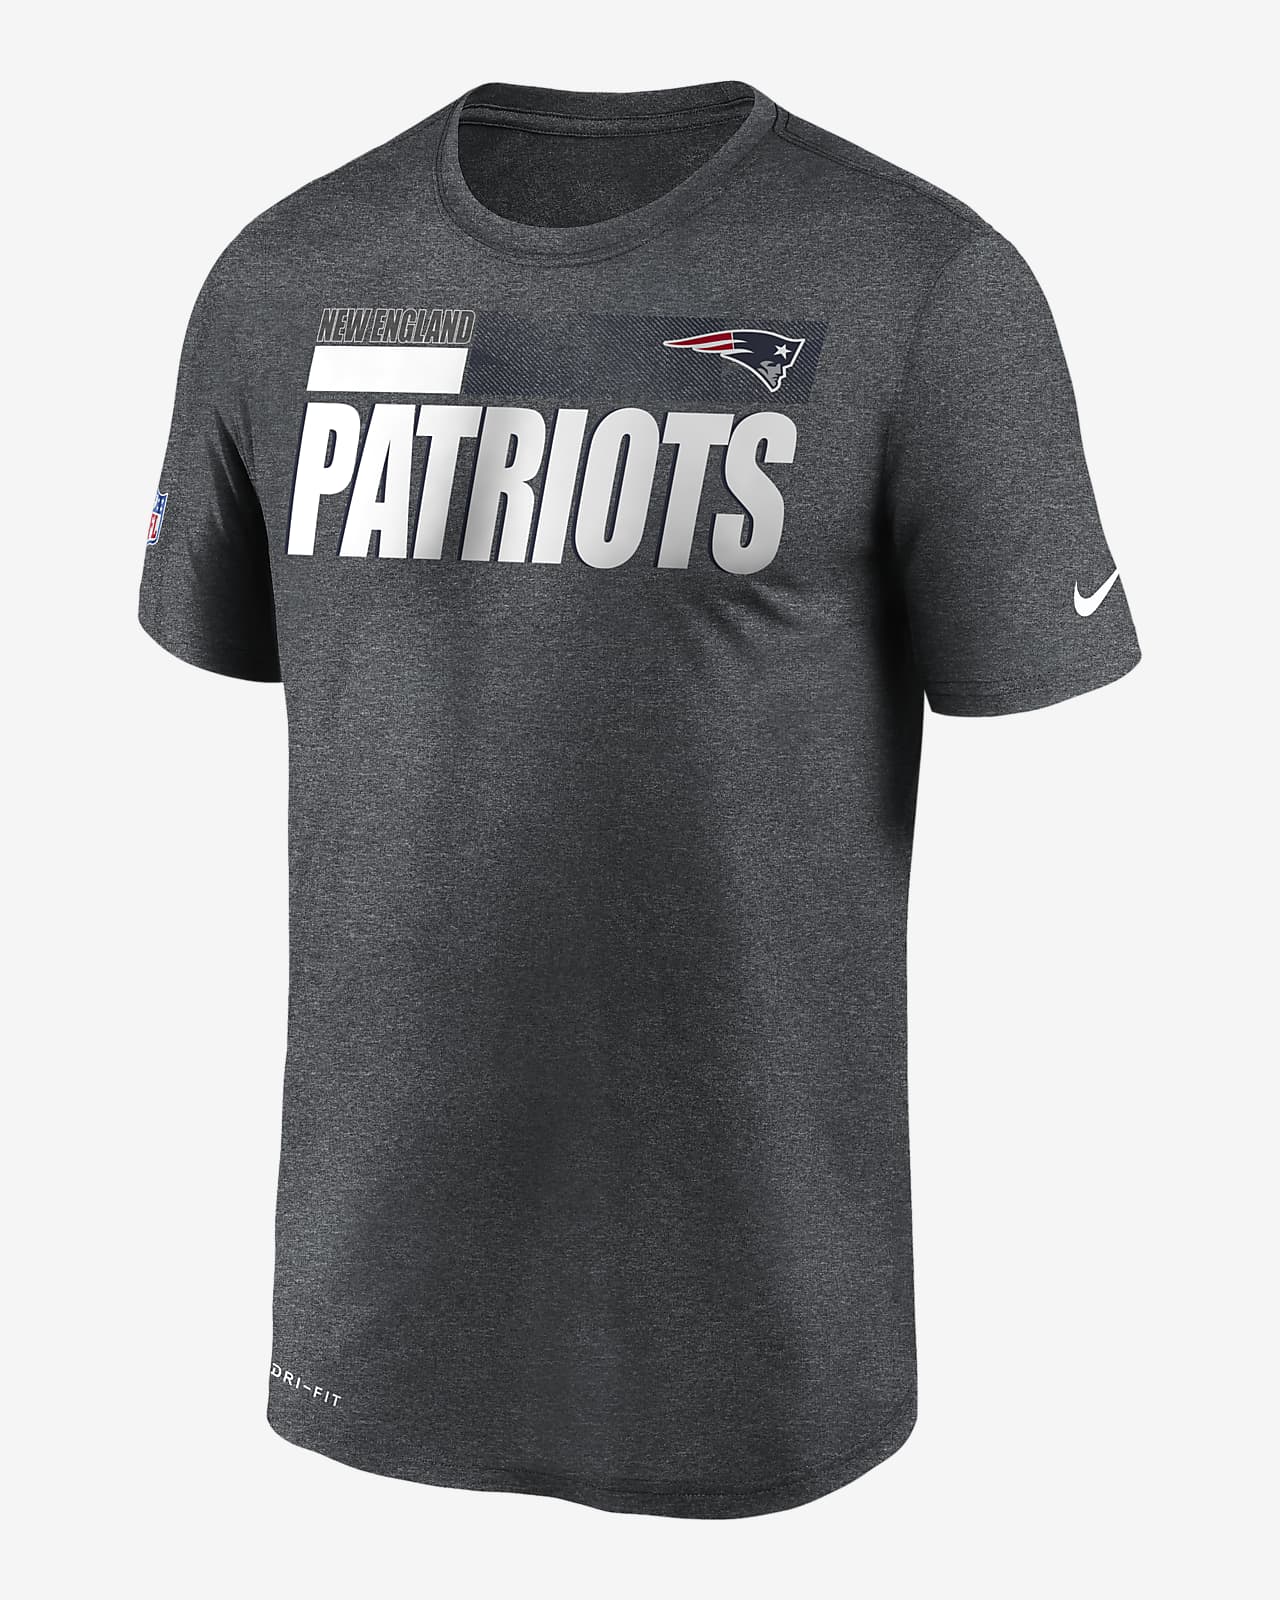 patriots nfl t shirts